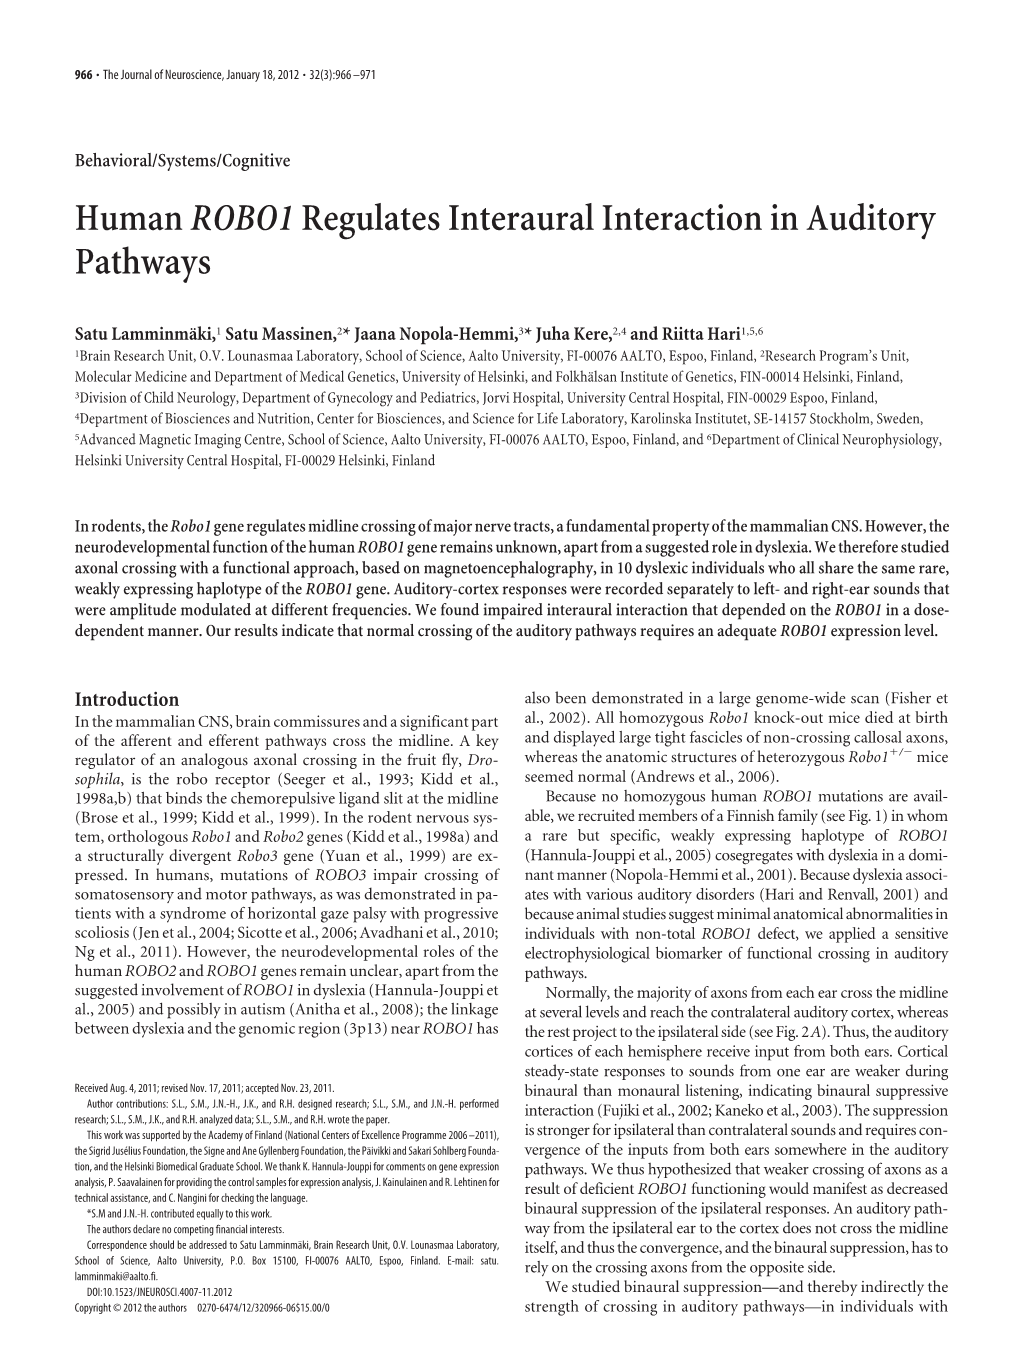 Humanrobo1regulates Interaural Interaction in Auditory Pathways